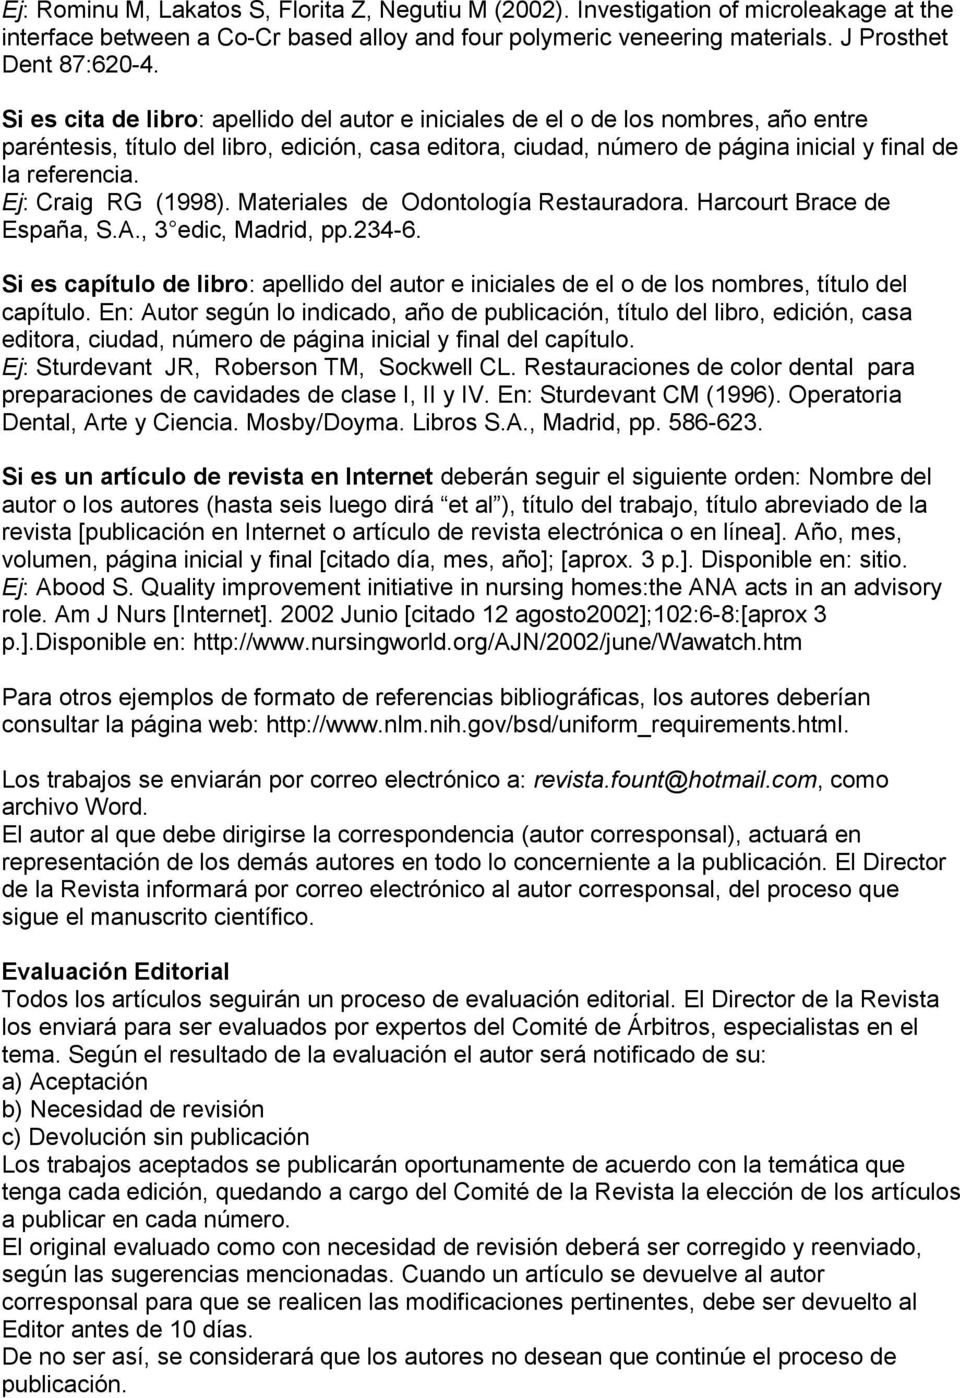 Ej: Craig RG (1998). Materiales de Odontología Restauradora. Harcourt Brace de España, S.A., 3 edic, Madrid, pp.234-6.